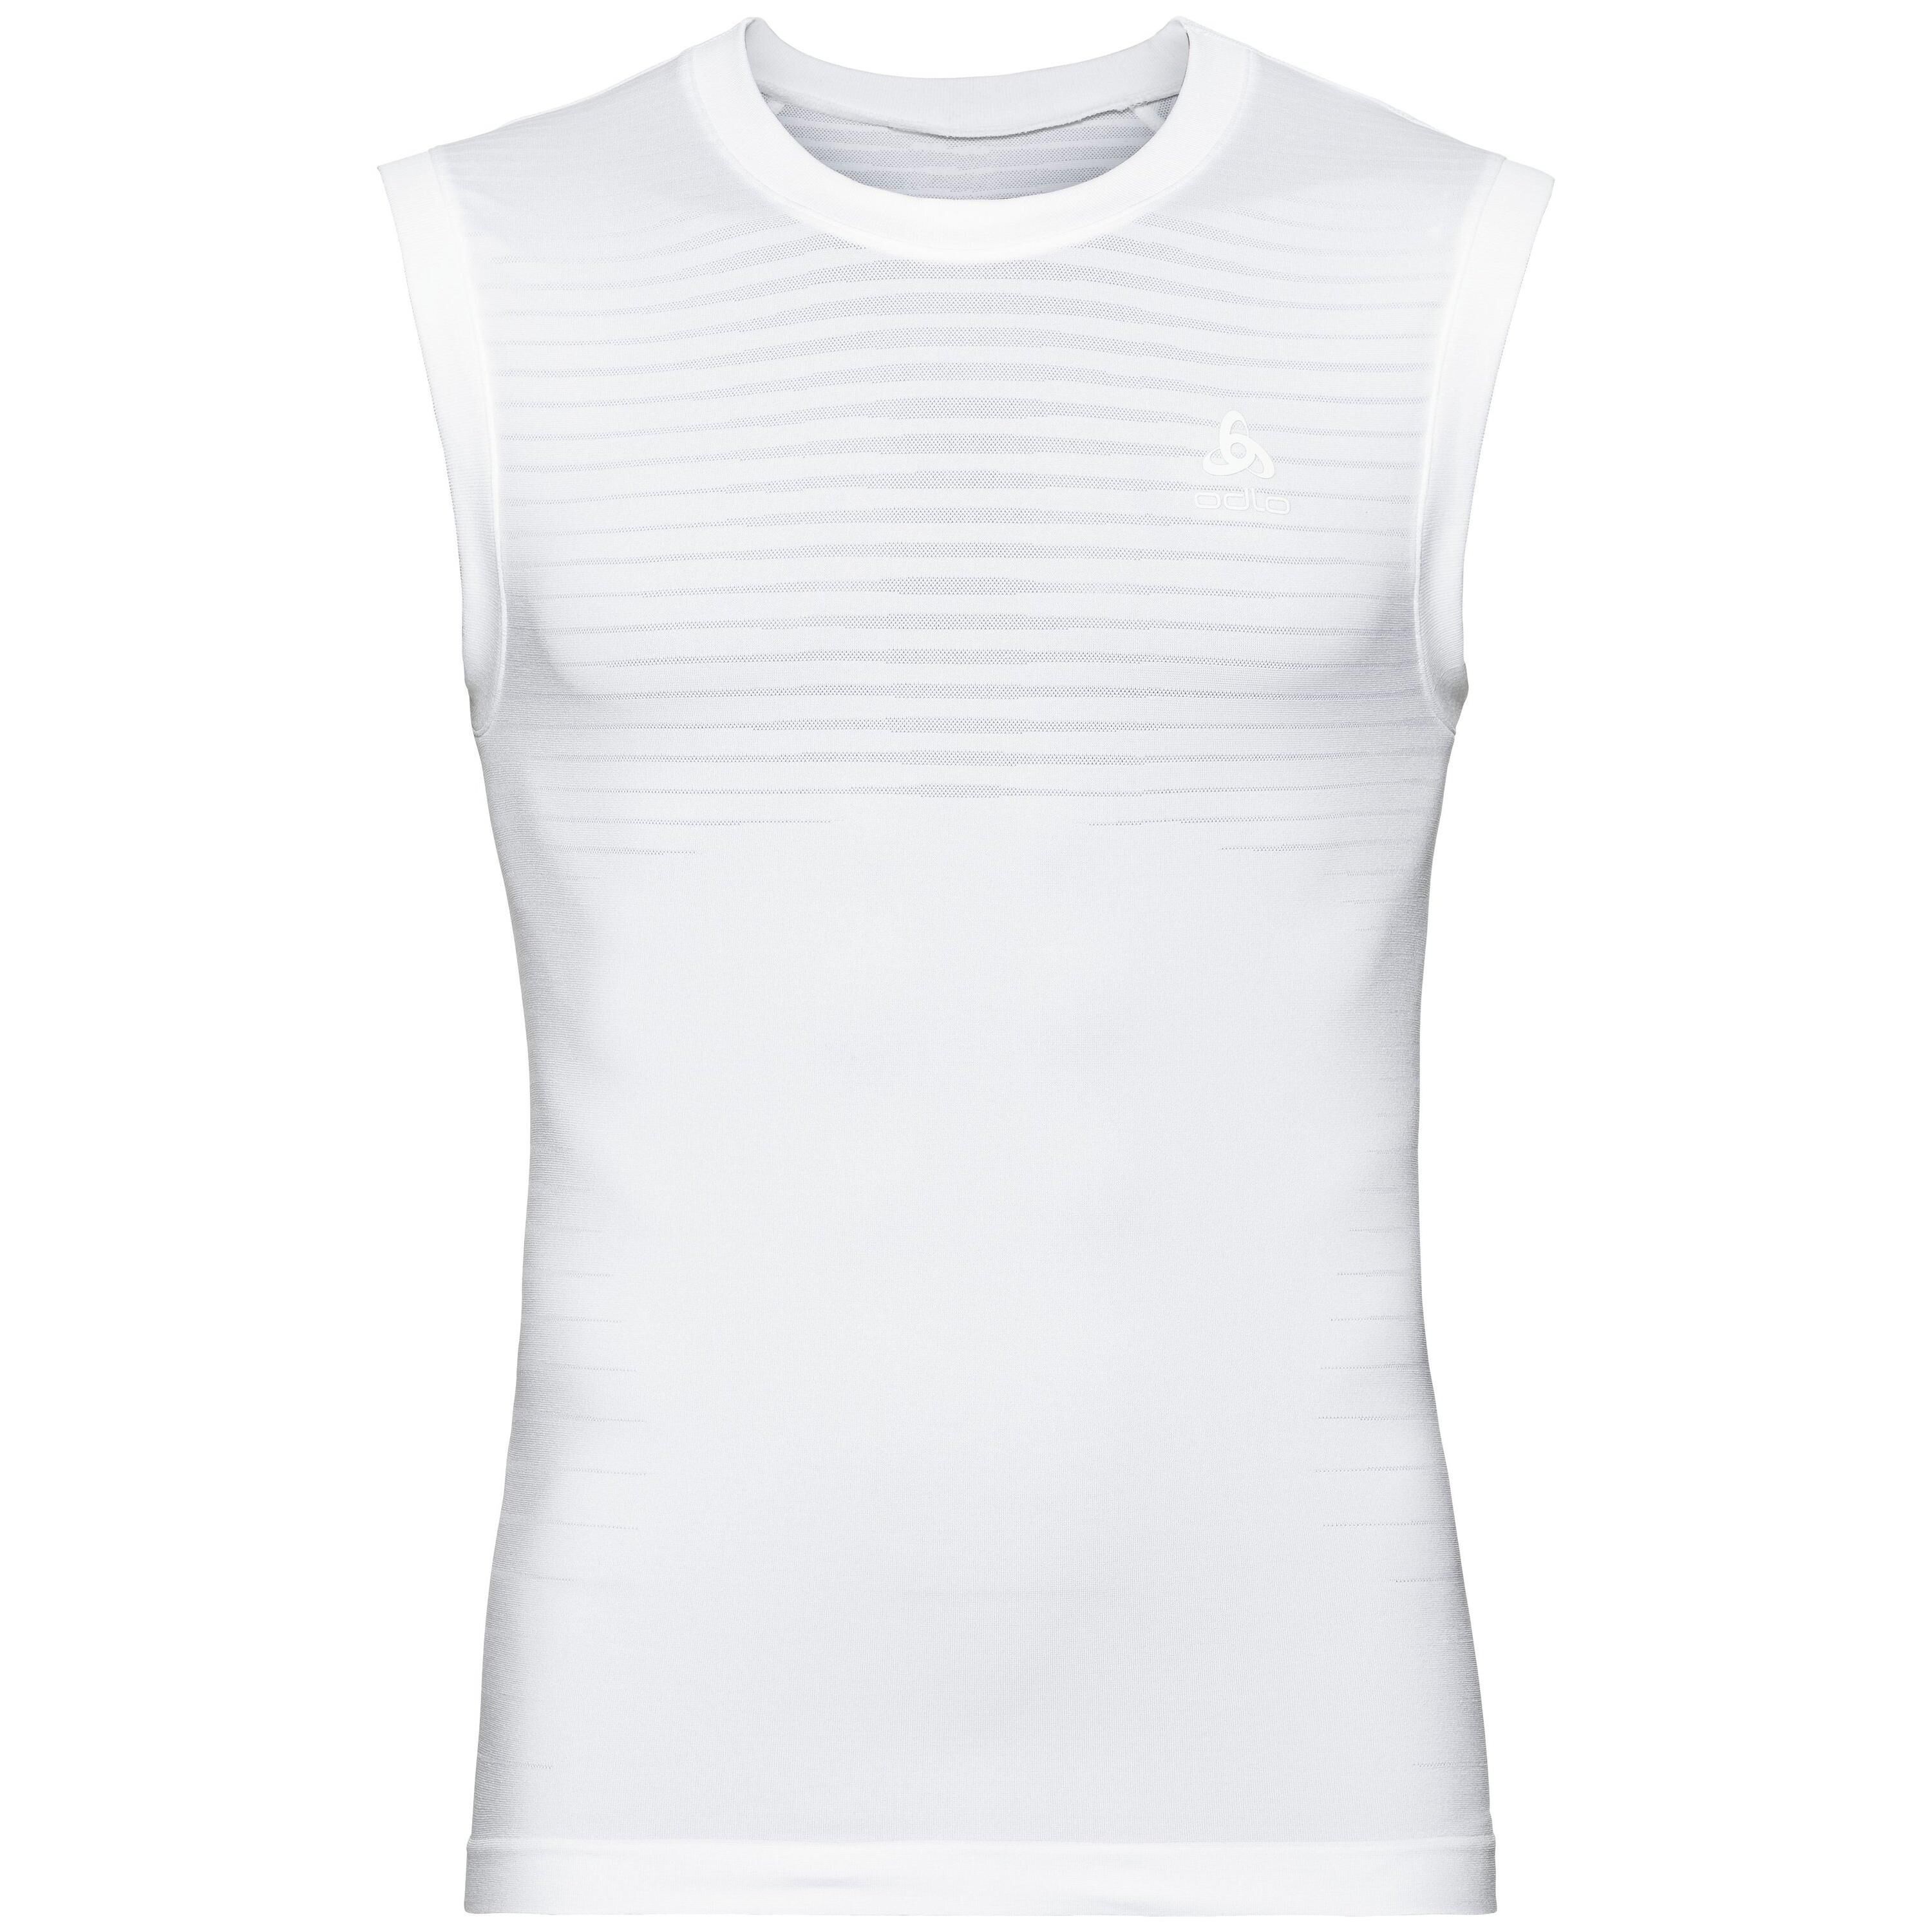 Odlo Performance Light - Camiseta sin mangas - Hombre